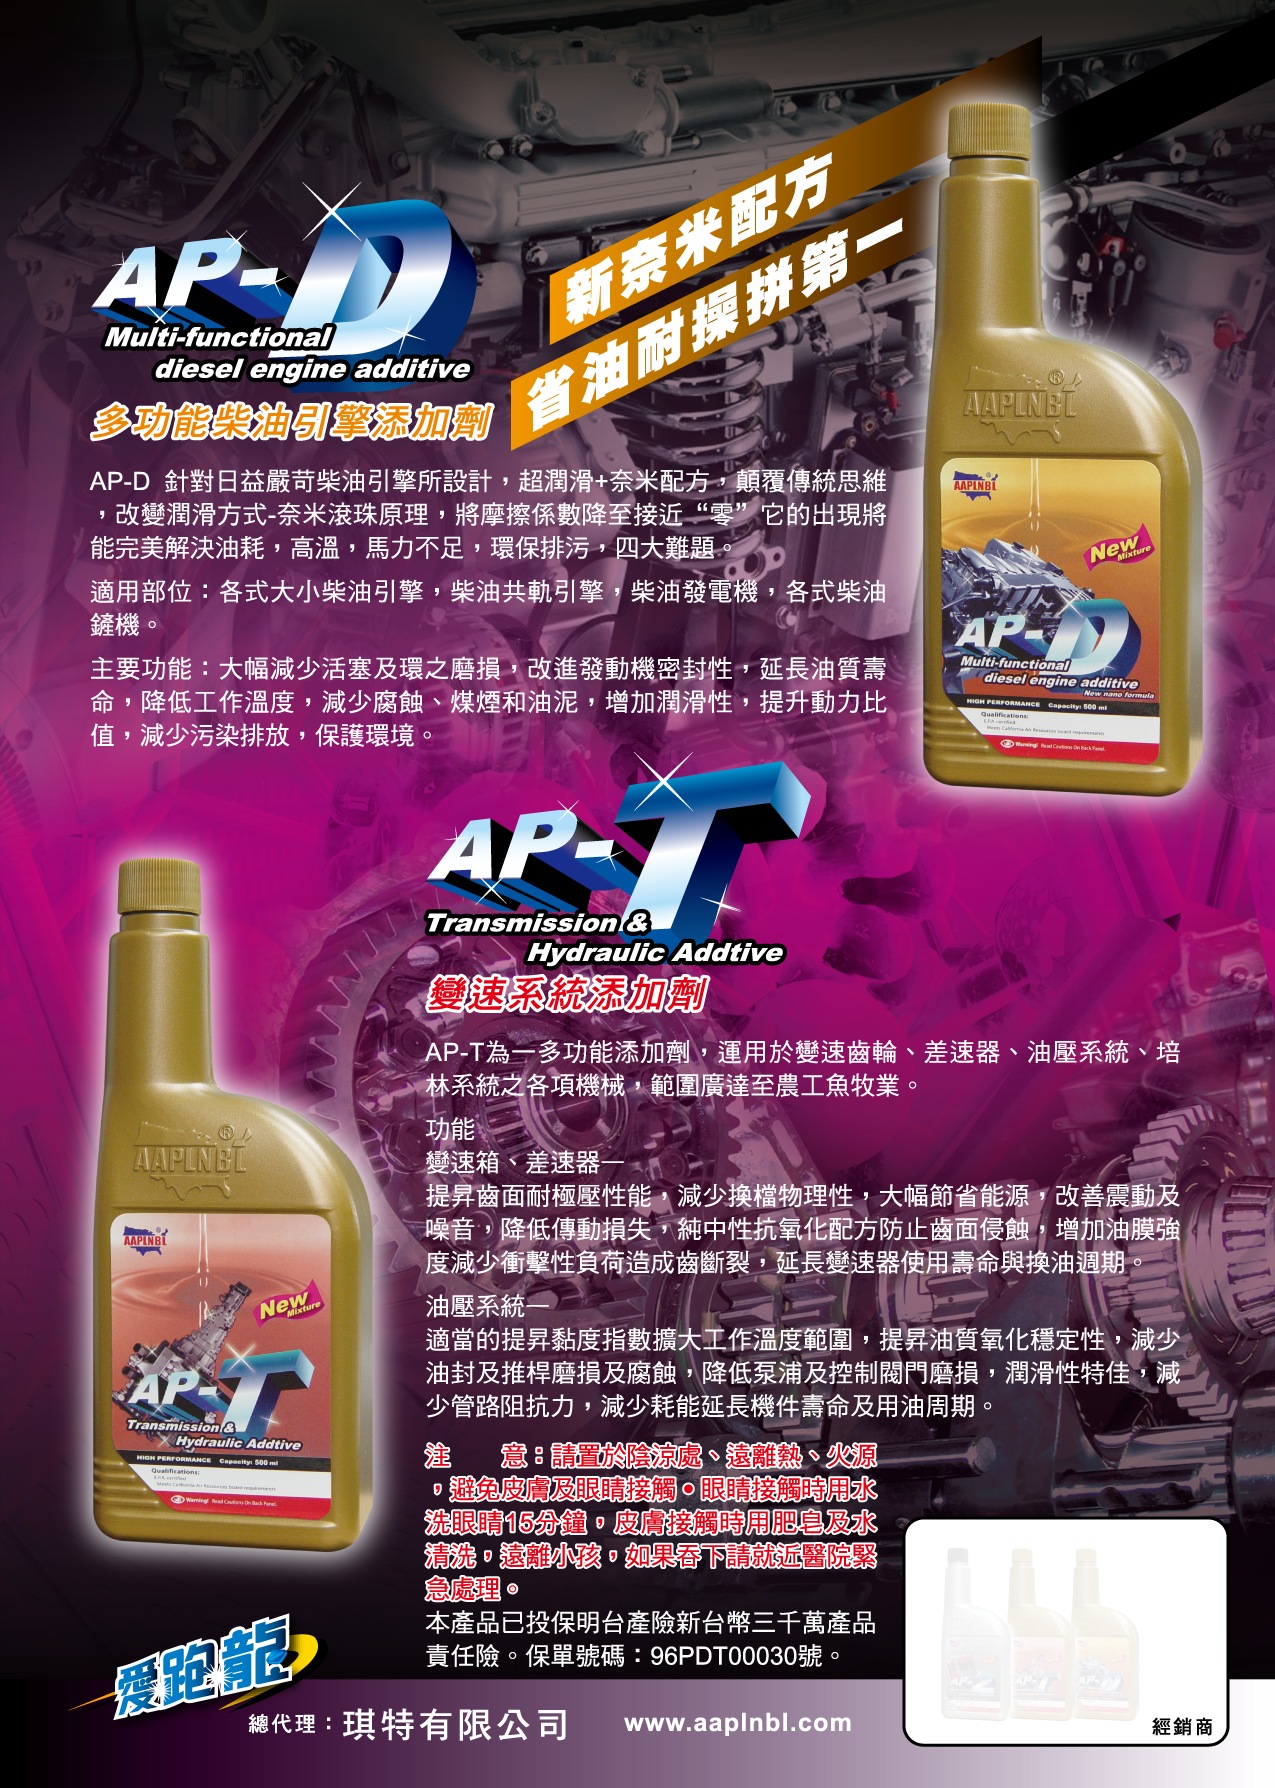 AP-D,多功能柴油引擎添加劑,AP-T,變速系統添加劑